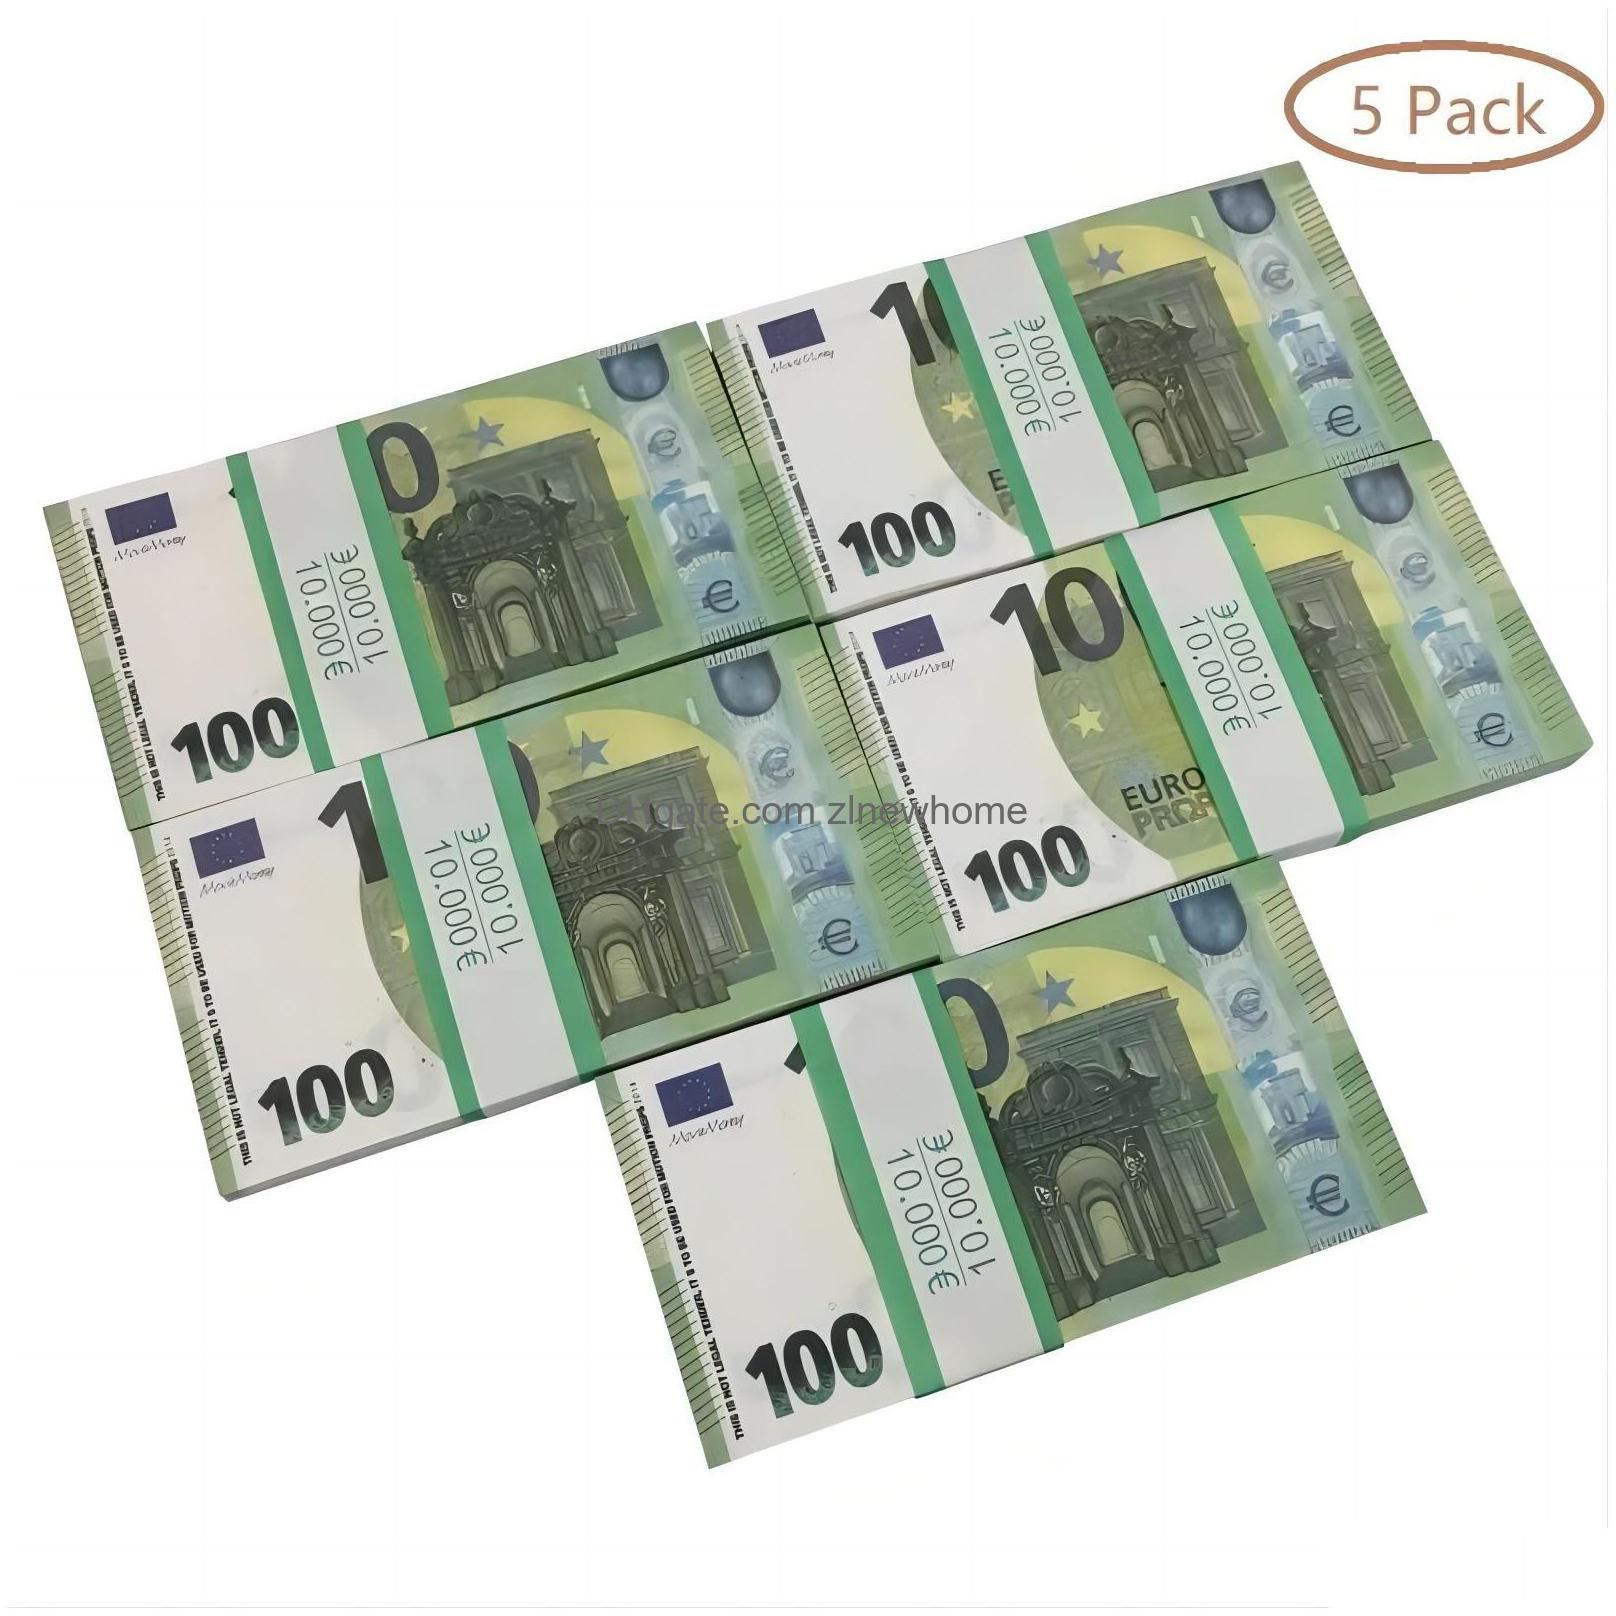 5pack 100 евро